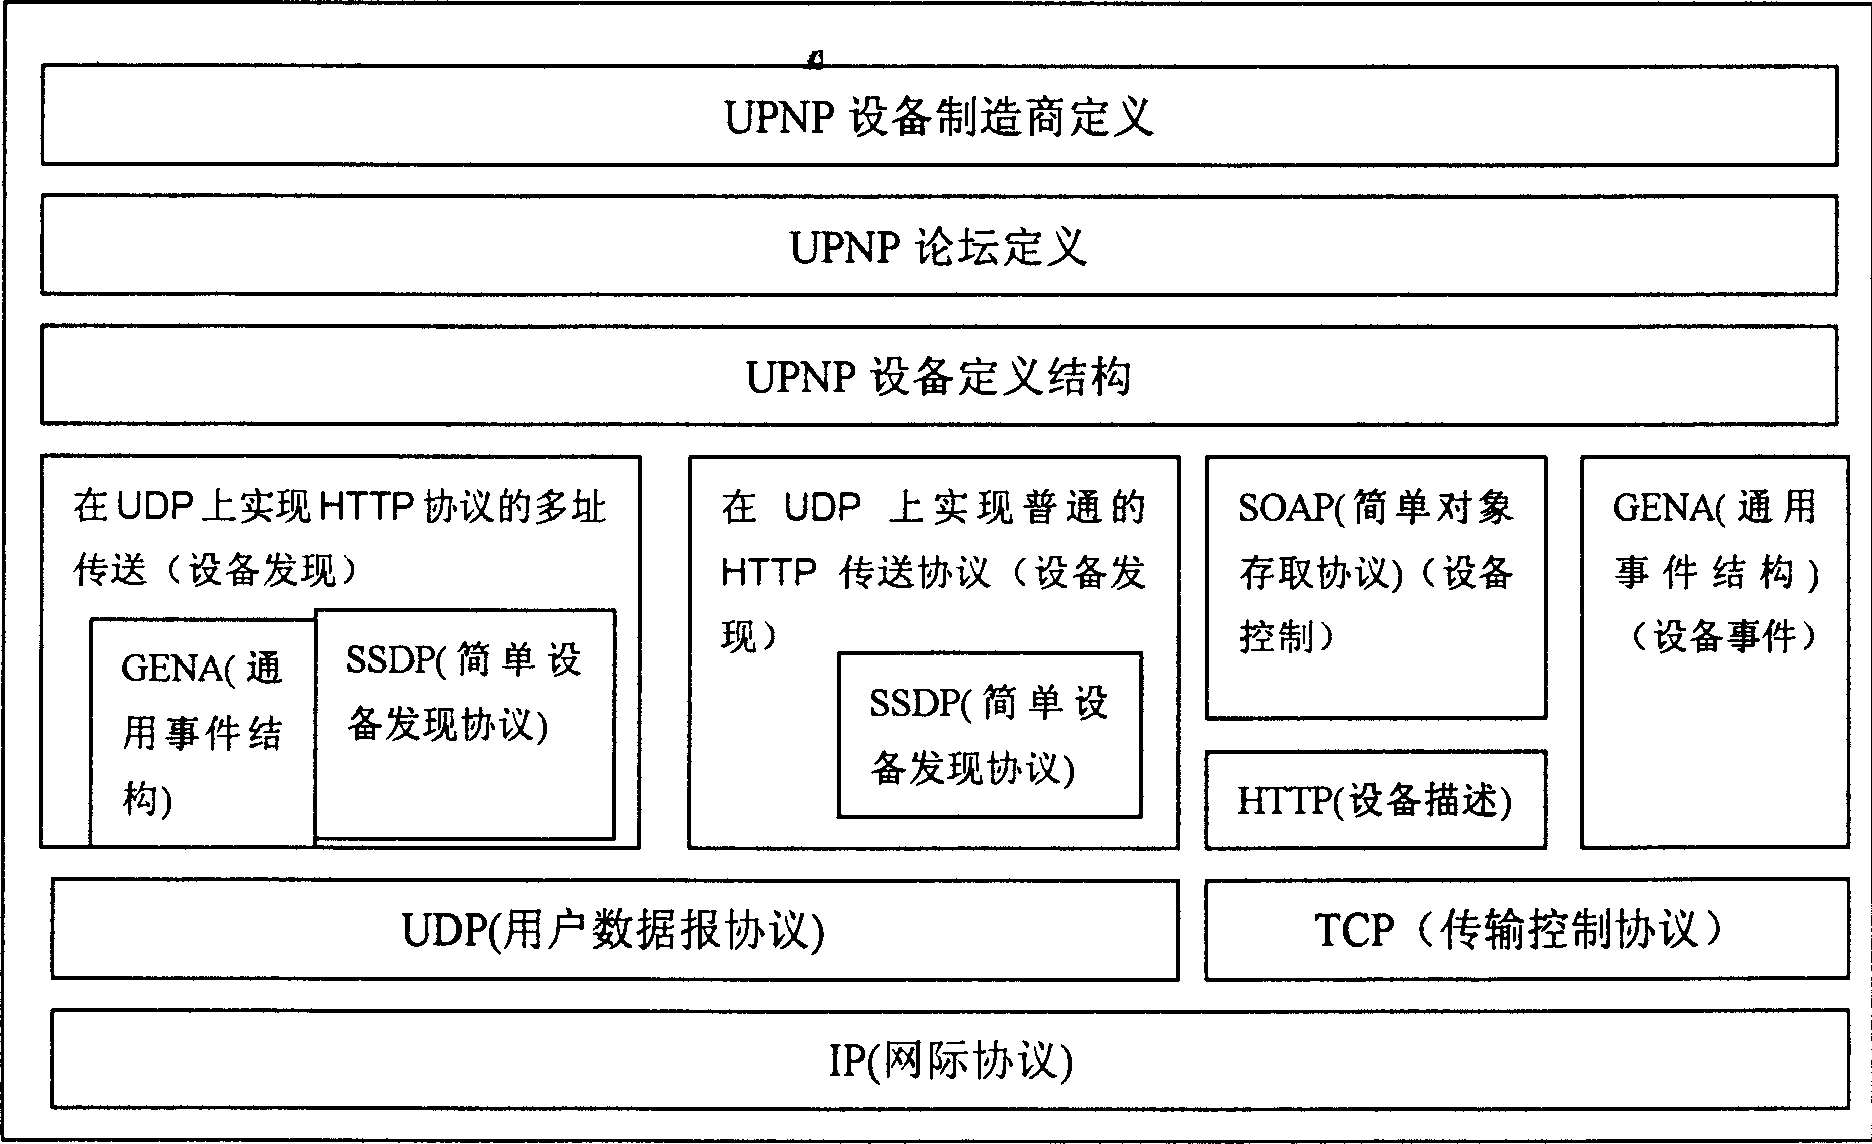 Medium player under LINUX operating system based on UNP protocol